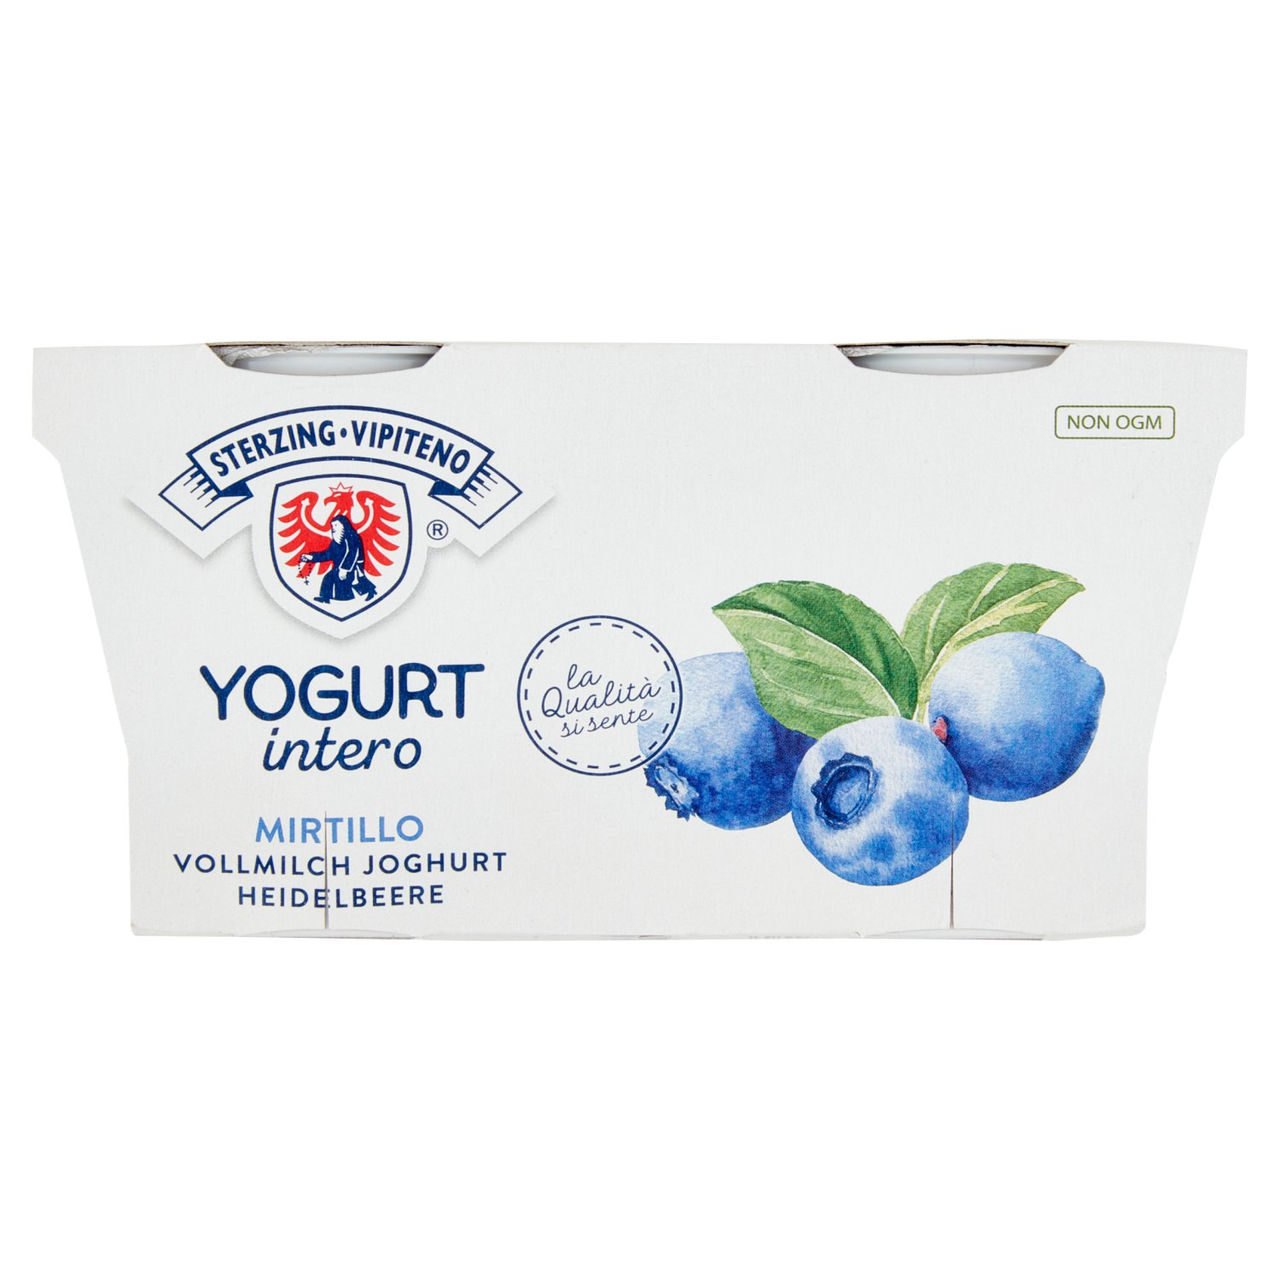 Sterzing Vipiteno Yogurt intero Mirtillo 2 x 125 g